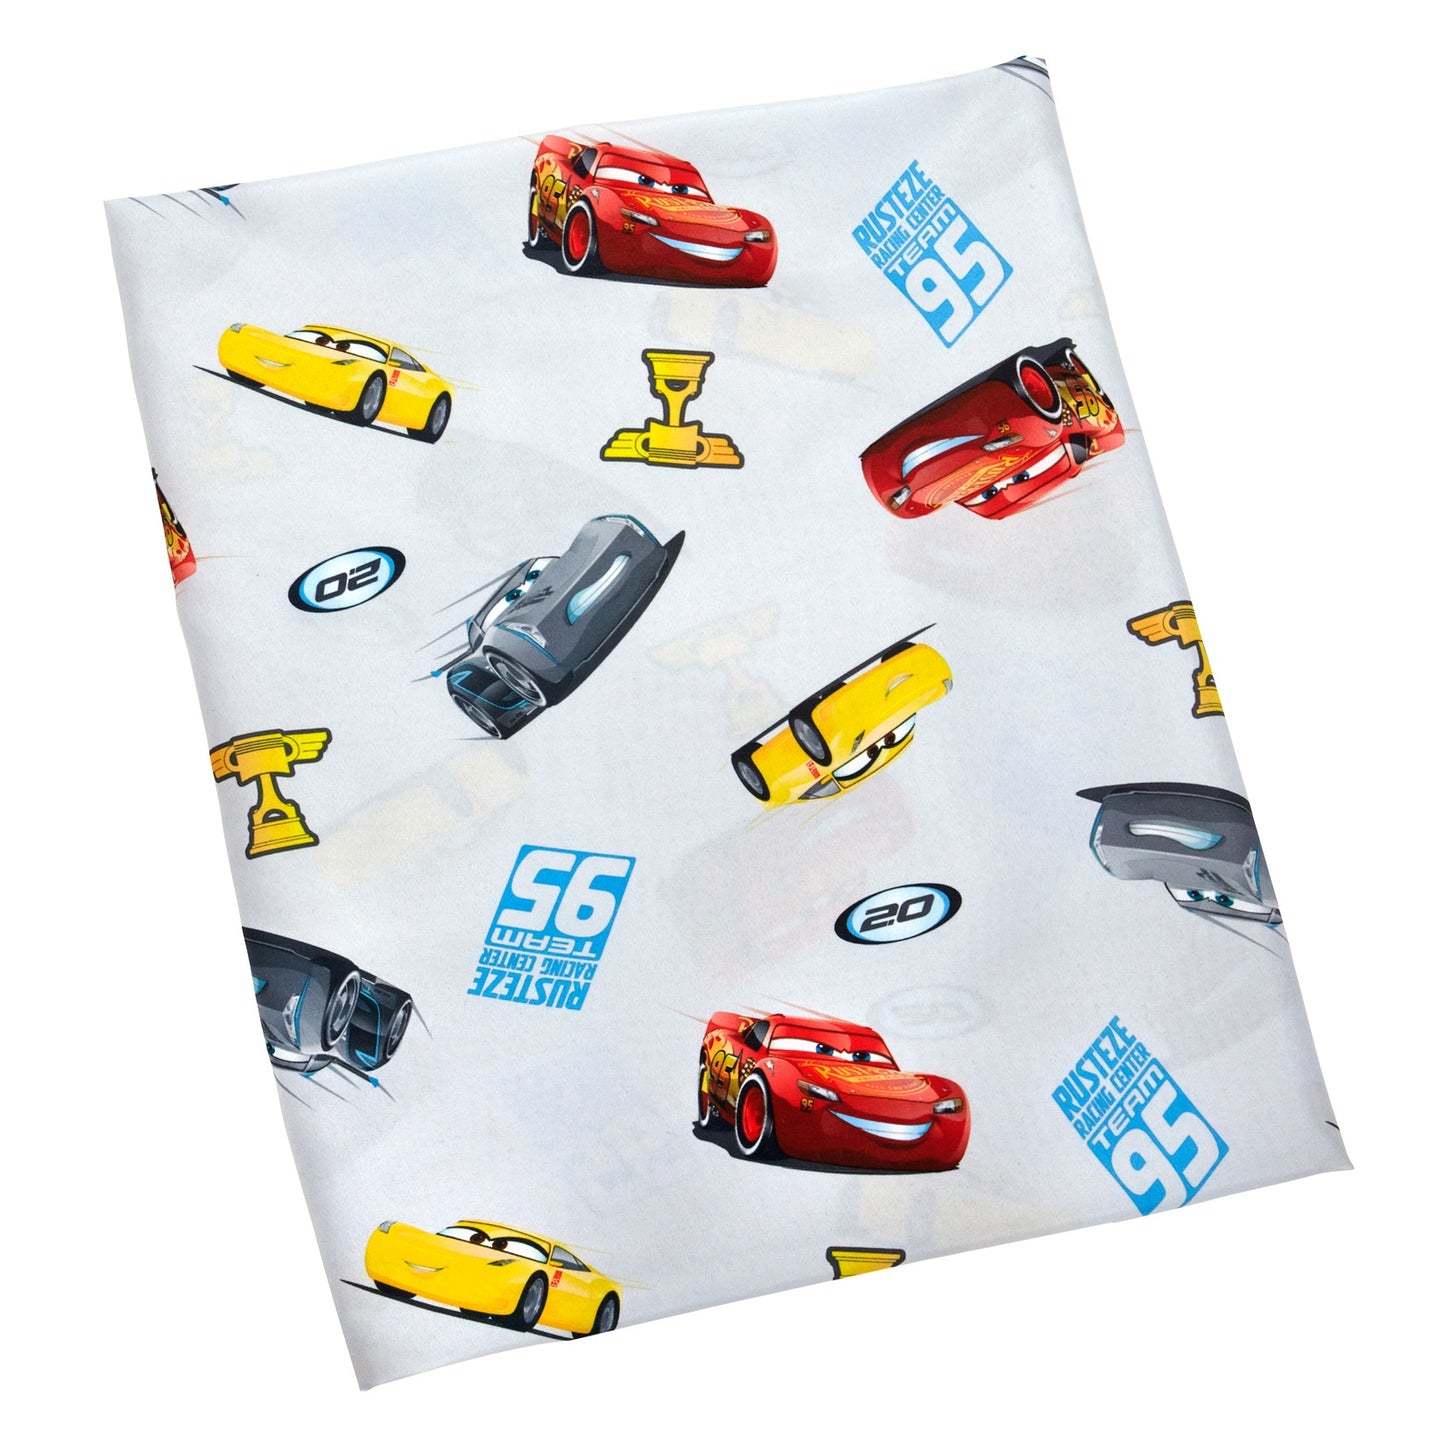 Disney Cars Easy-Fold Toddler Nap Mat in Red